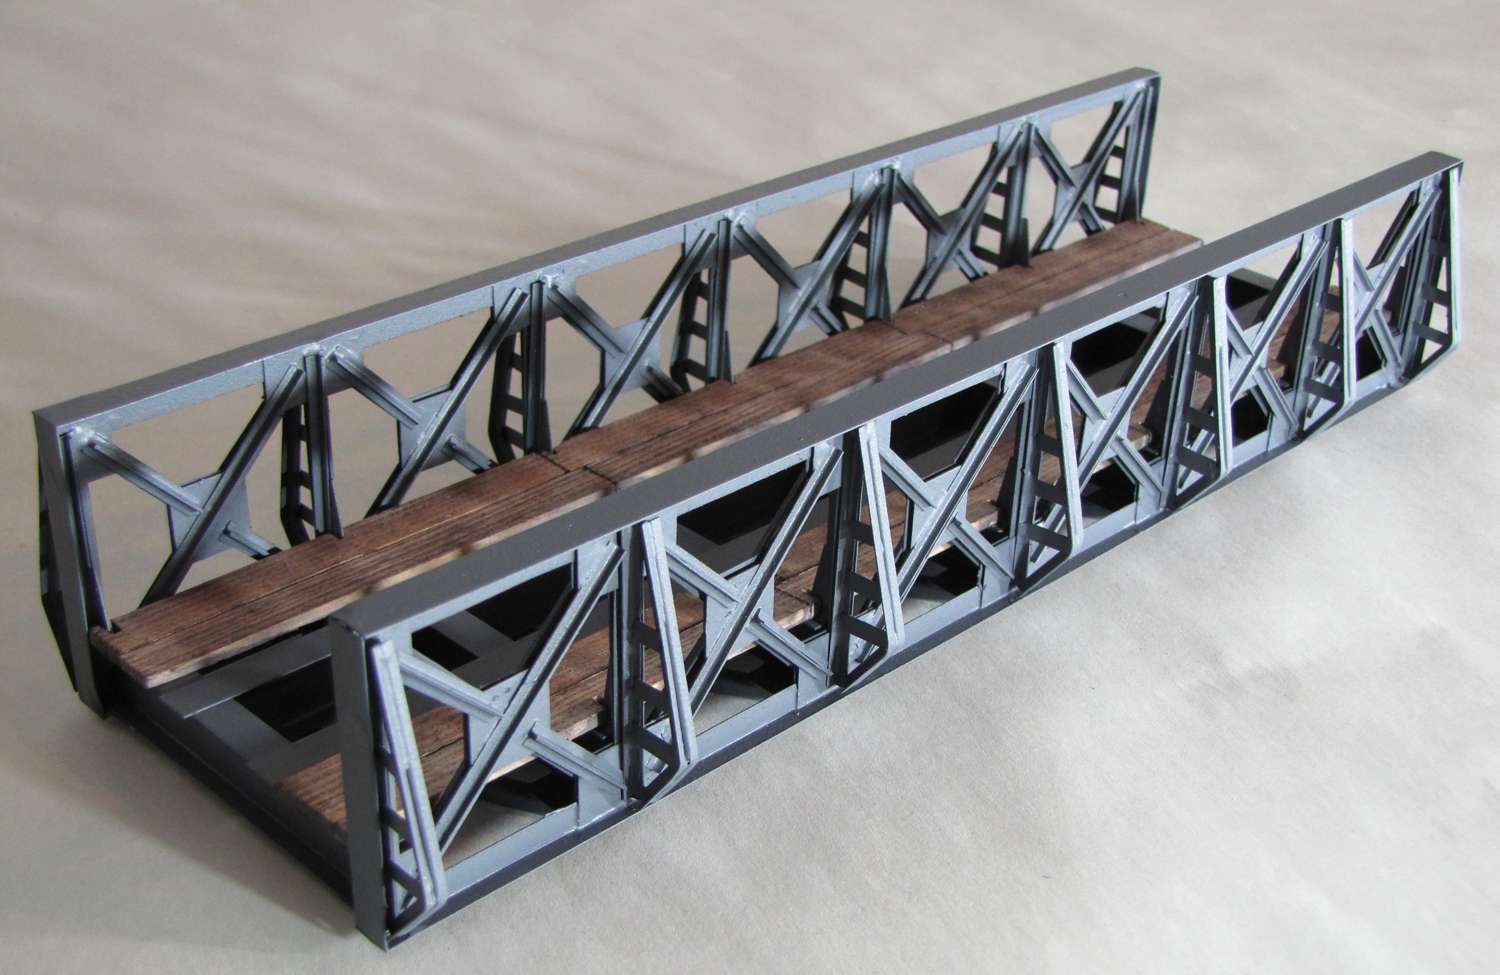 Hack 10140 - V24 - Vorflutbrücke 24cm, 8,7cm breit, 4,5cm hoch, mit Holzstegen